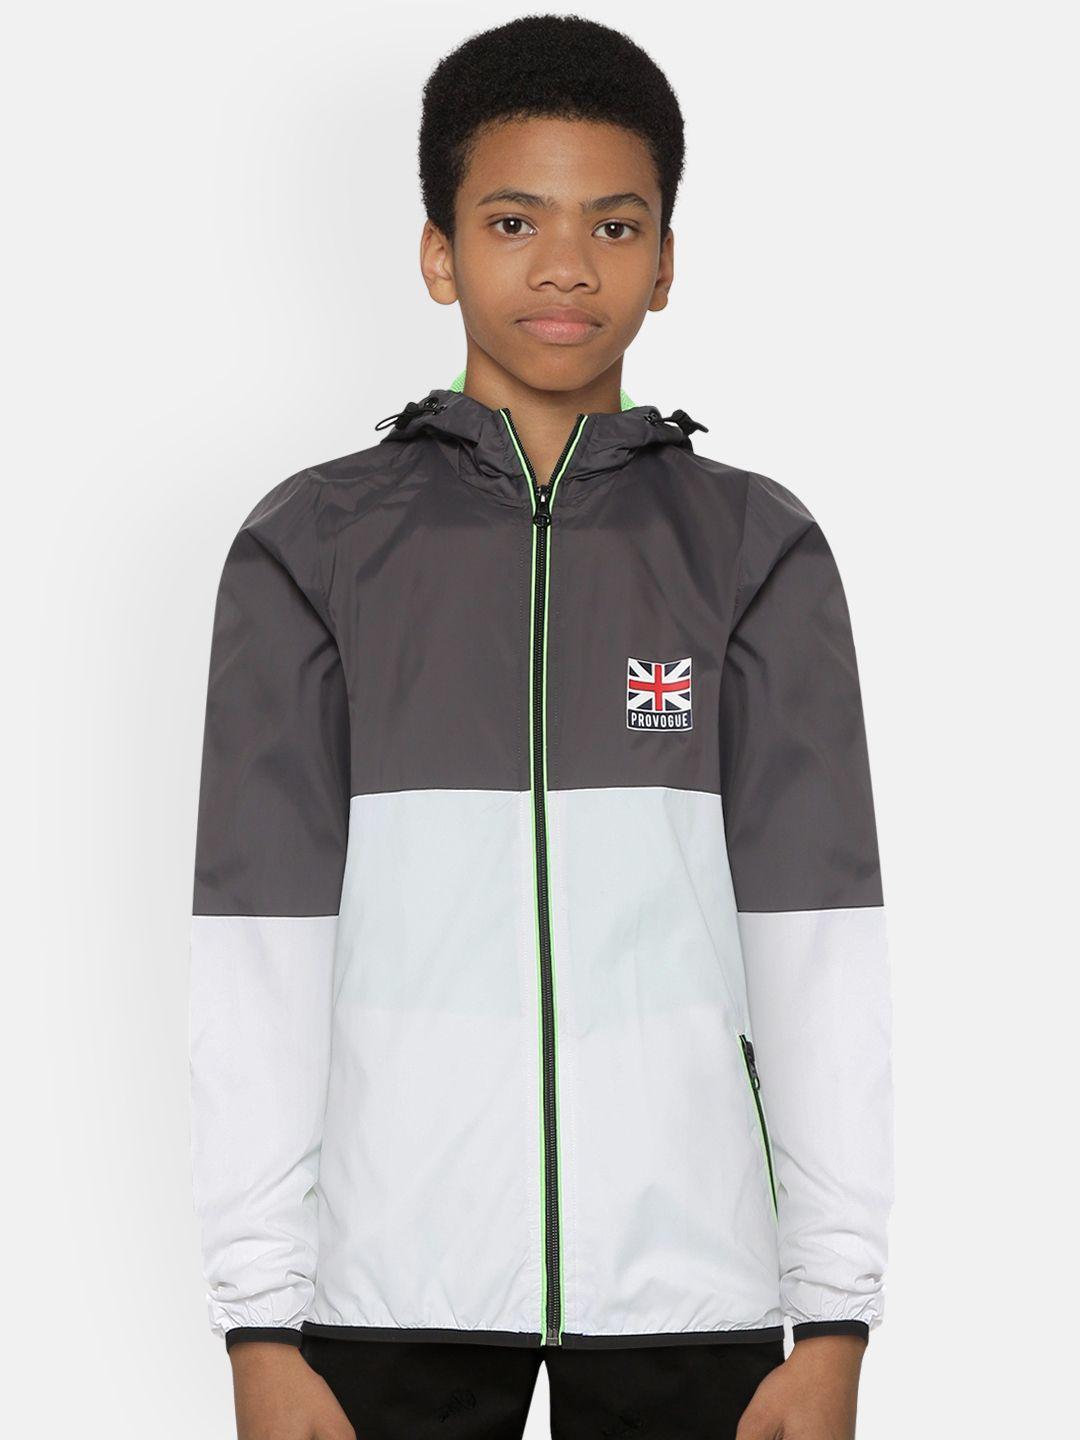 provogue-boys-white-&-charcoal-grey-colourblocked-hooded-sporty-jacket